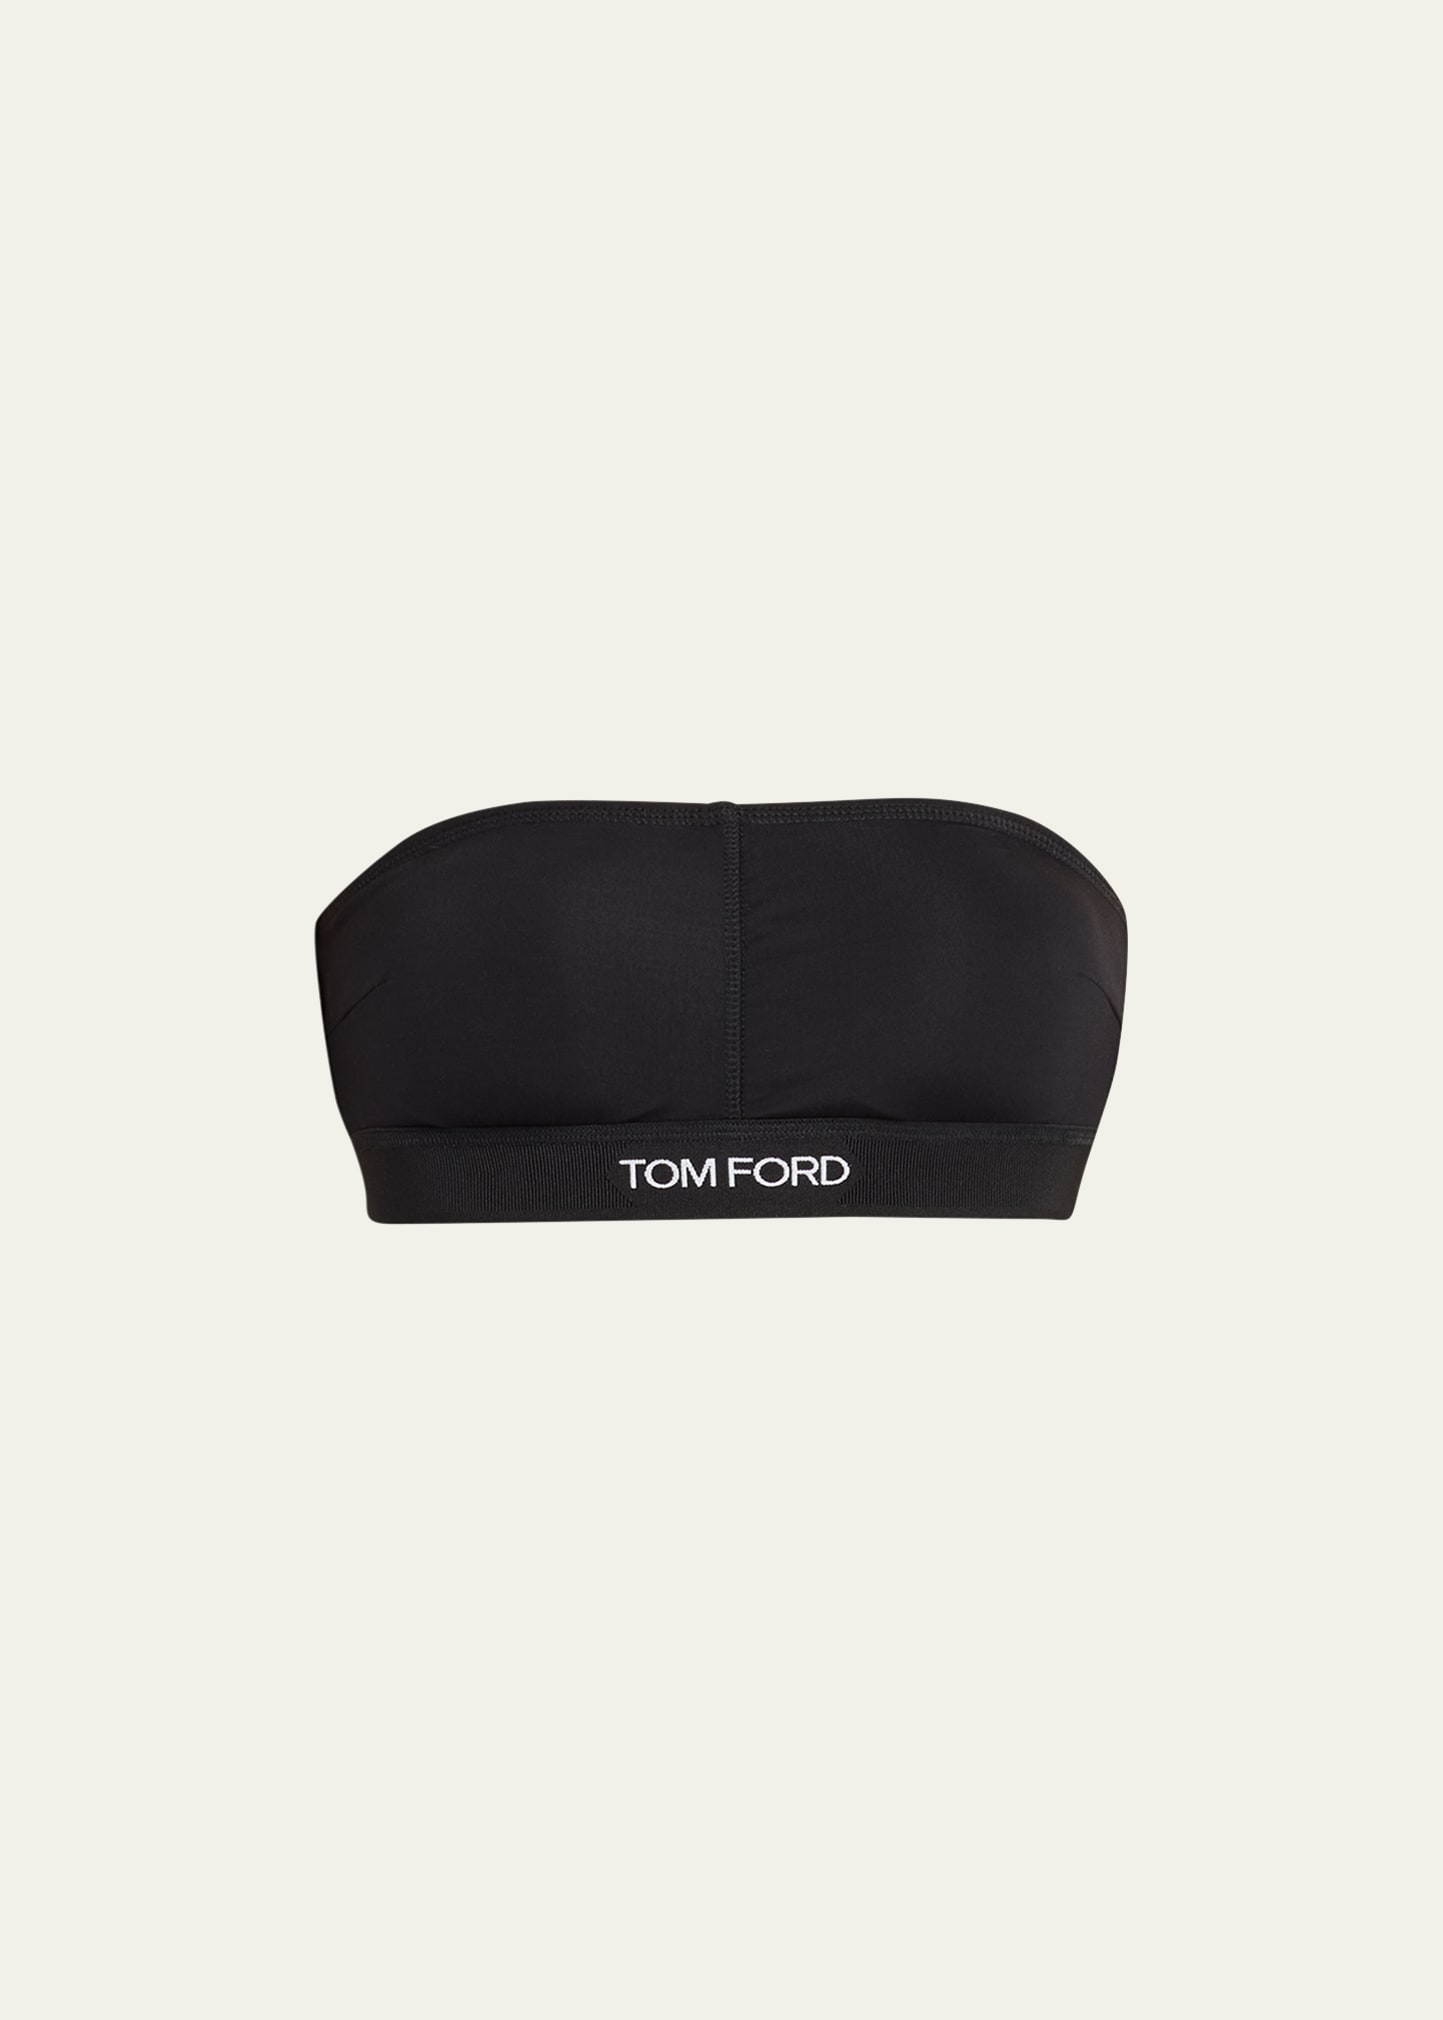 TOM FORD Strapless Bandeau w/ Logo Detail - Bergdorf Goodman